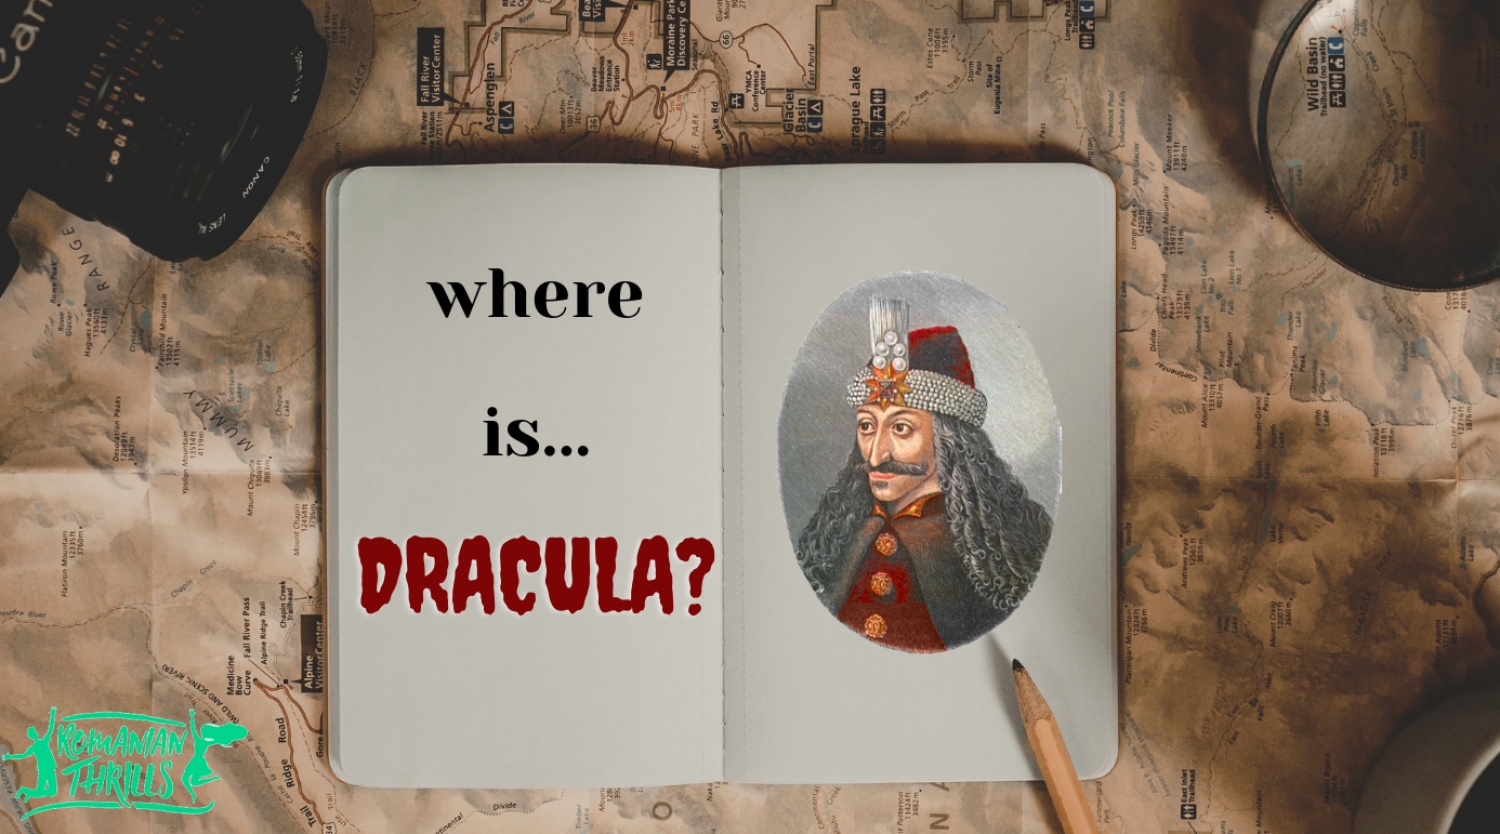 Follow Dracula's Trail in Romania